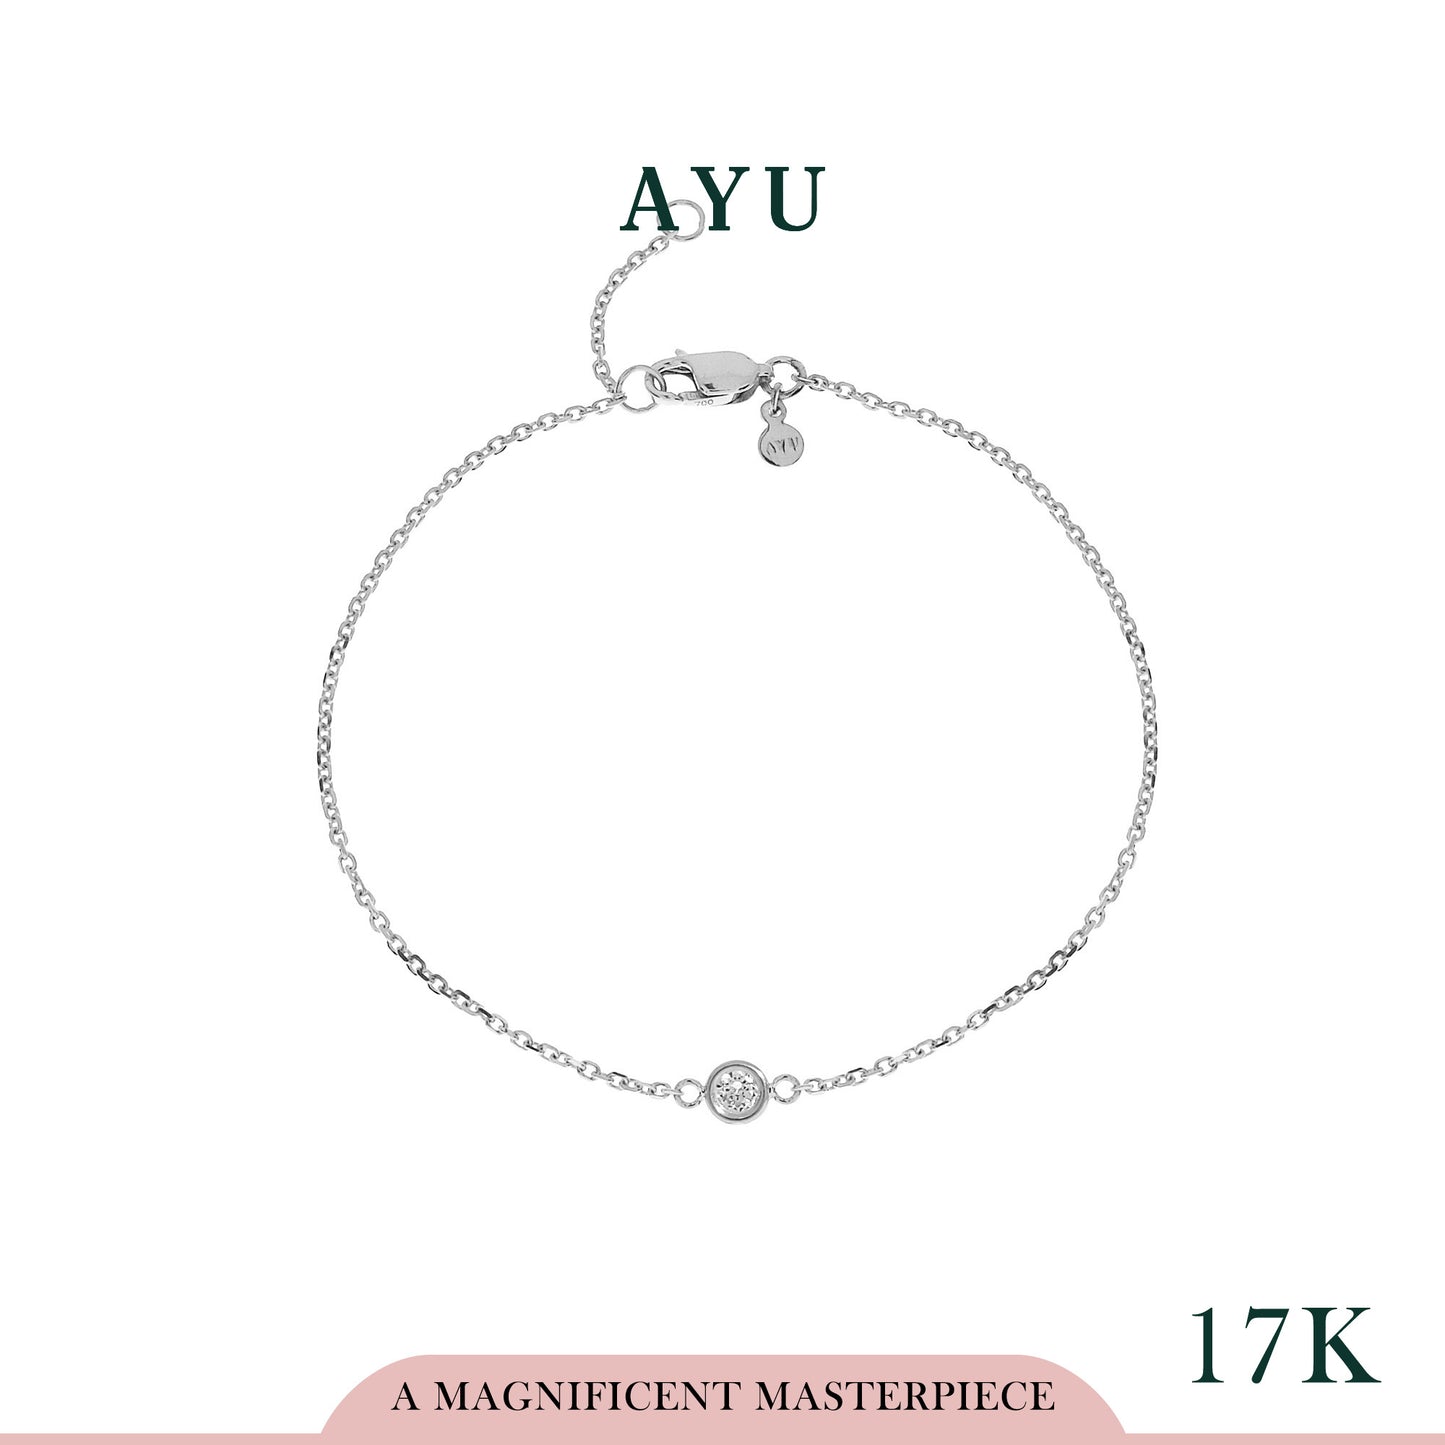 AYU Gelang Emas - Mini Bezel Chain Bracelet 17K White Gold